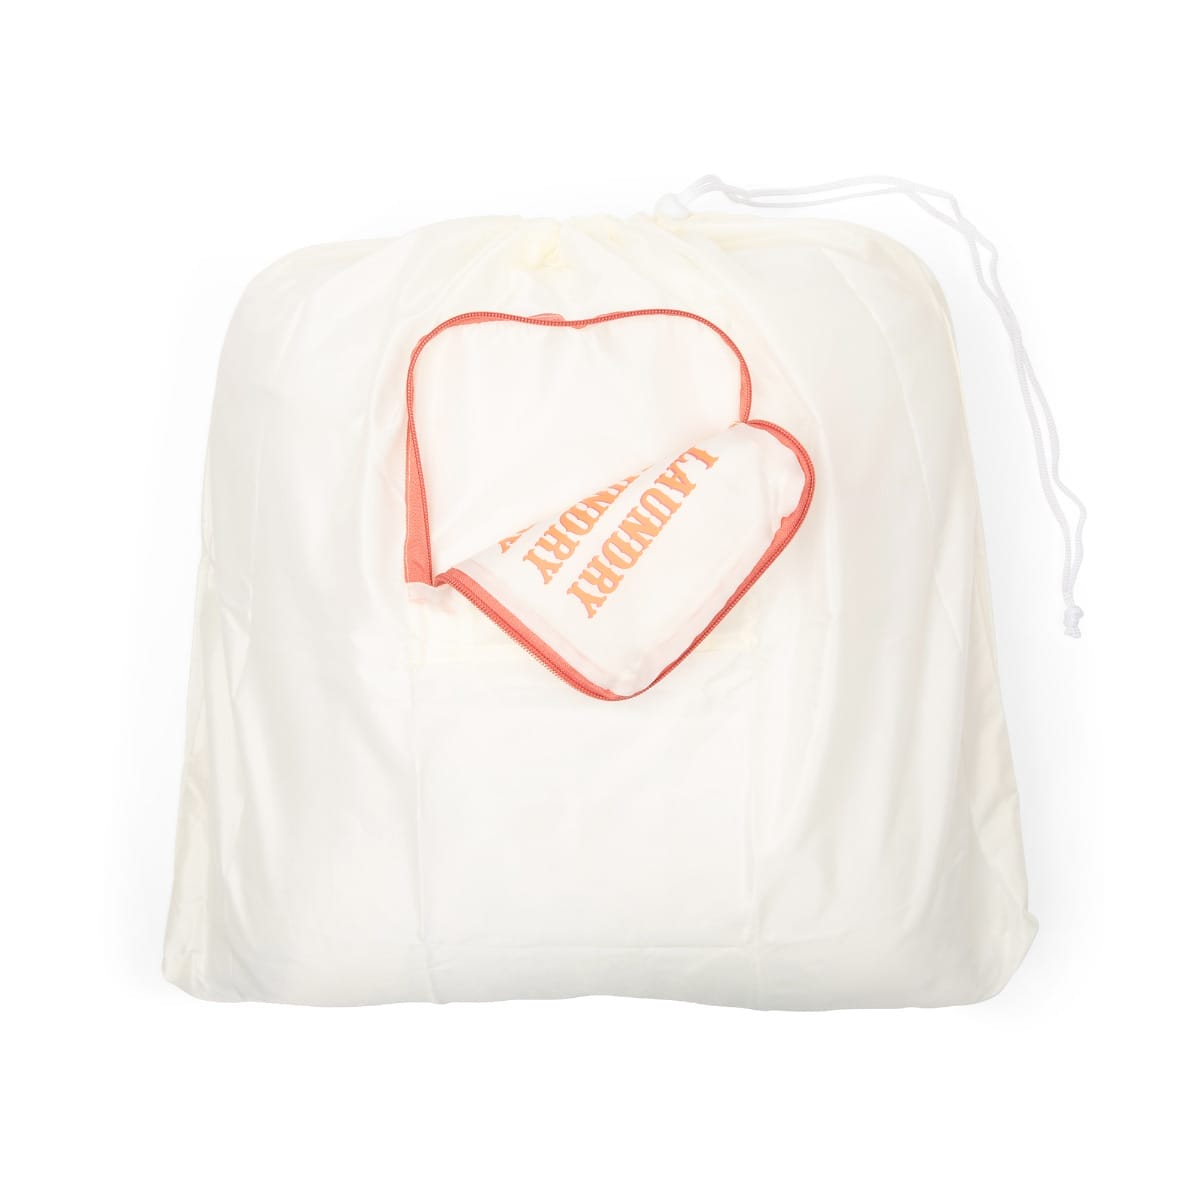 Cream & Coral Laundry Bag - Go West